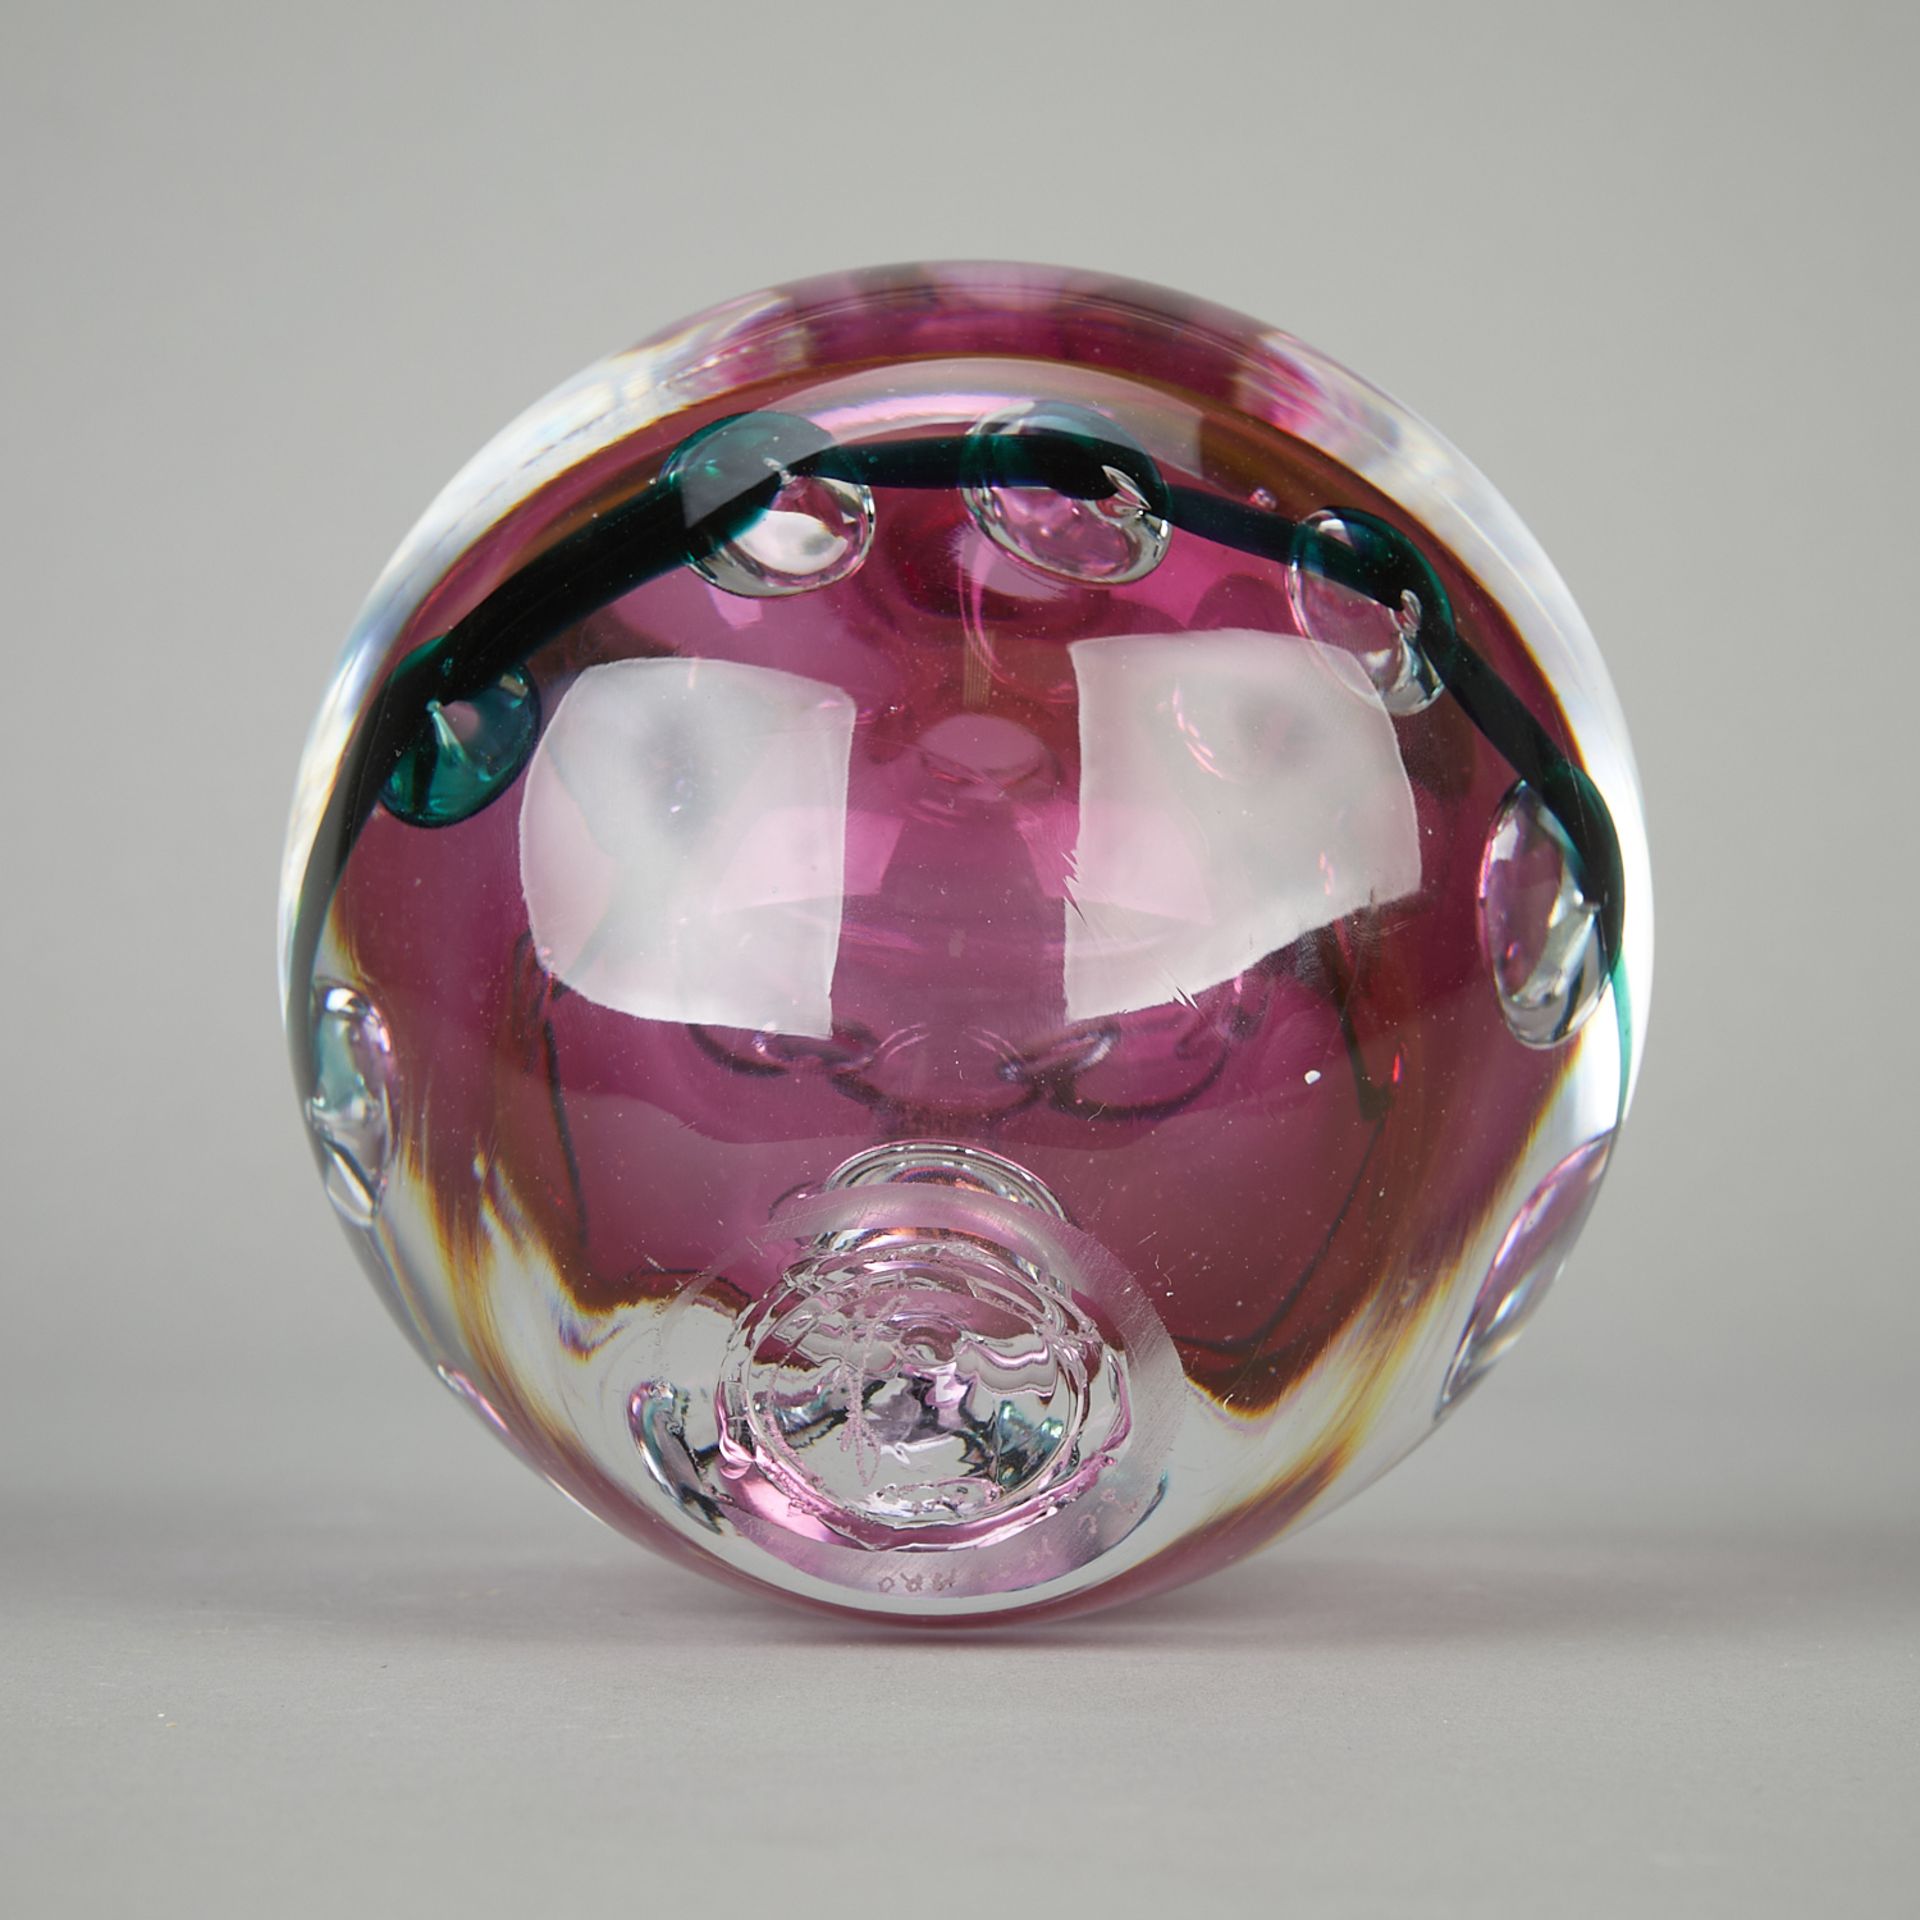 Jean-Claude Novaro Handblown Glass Vase 2000 - Image 7 of 8